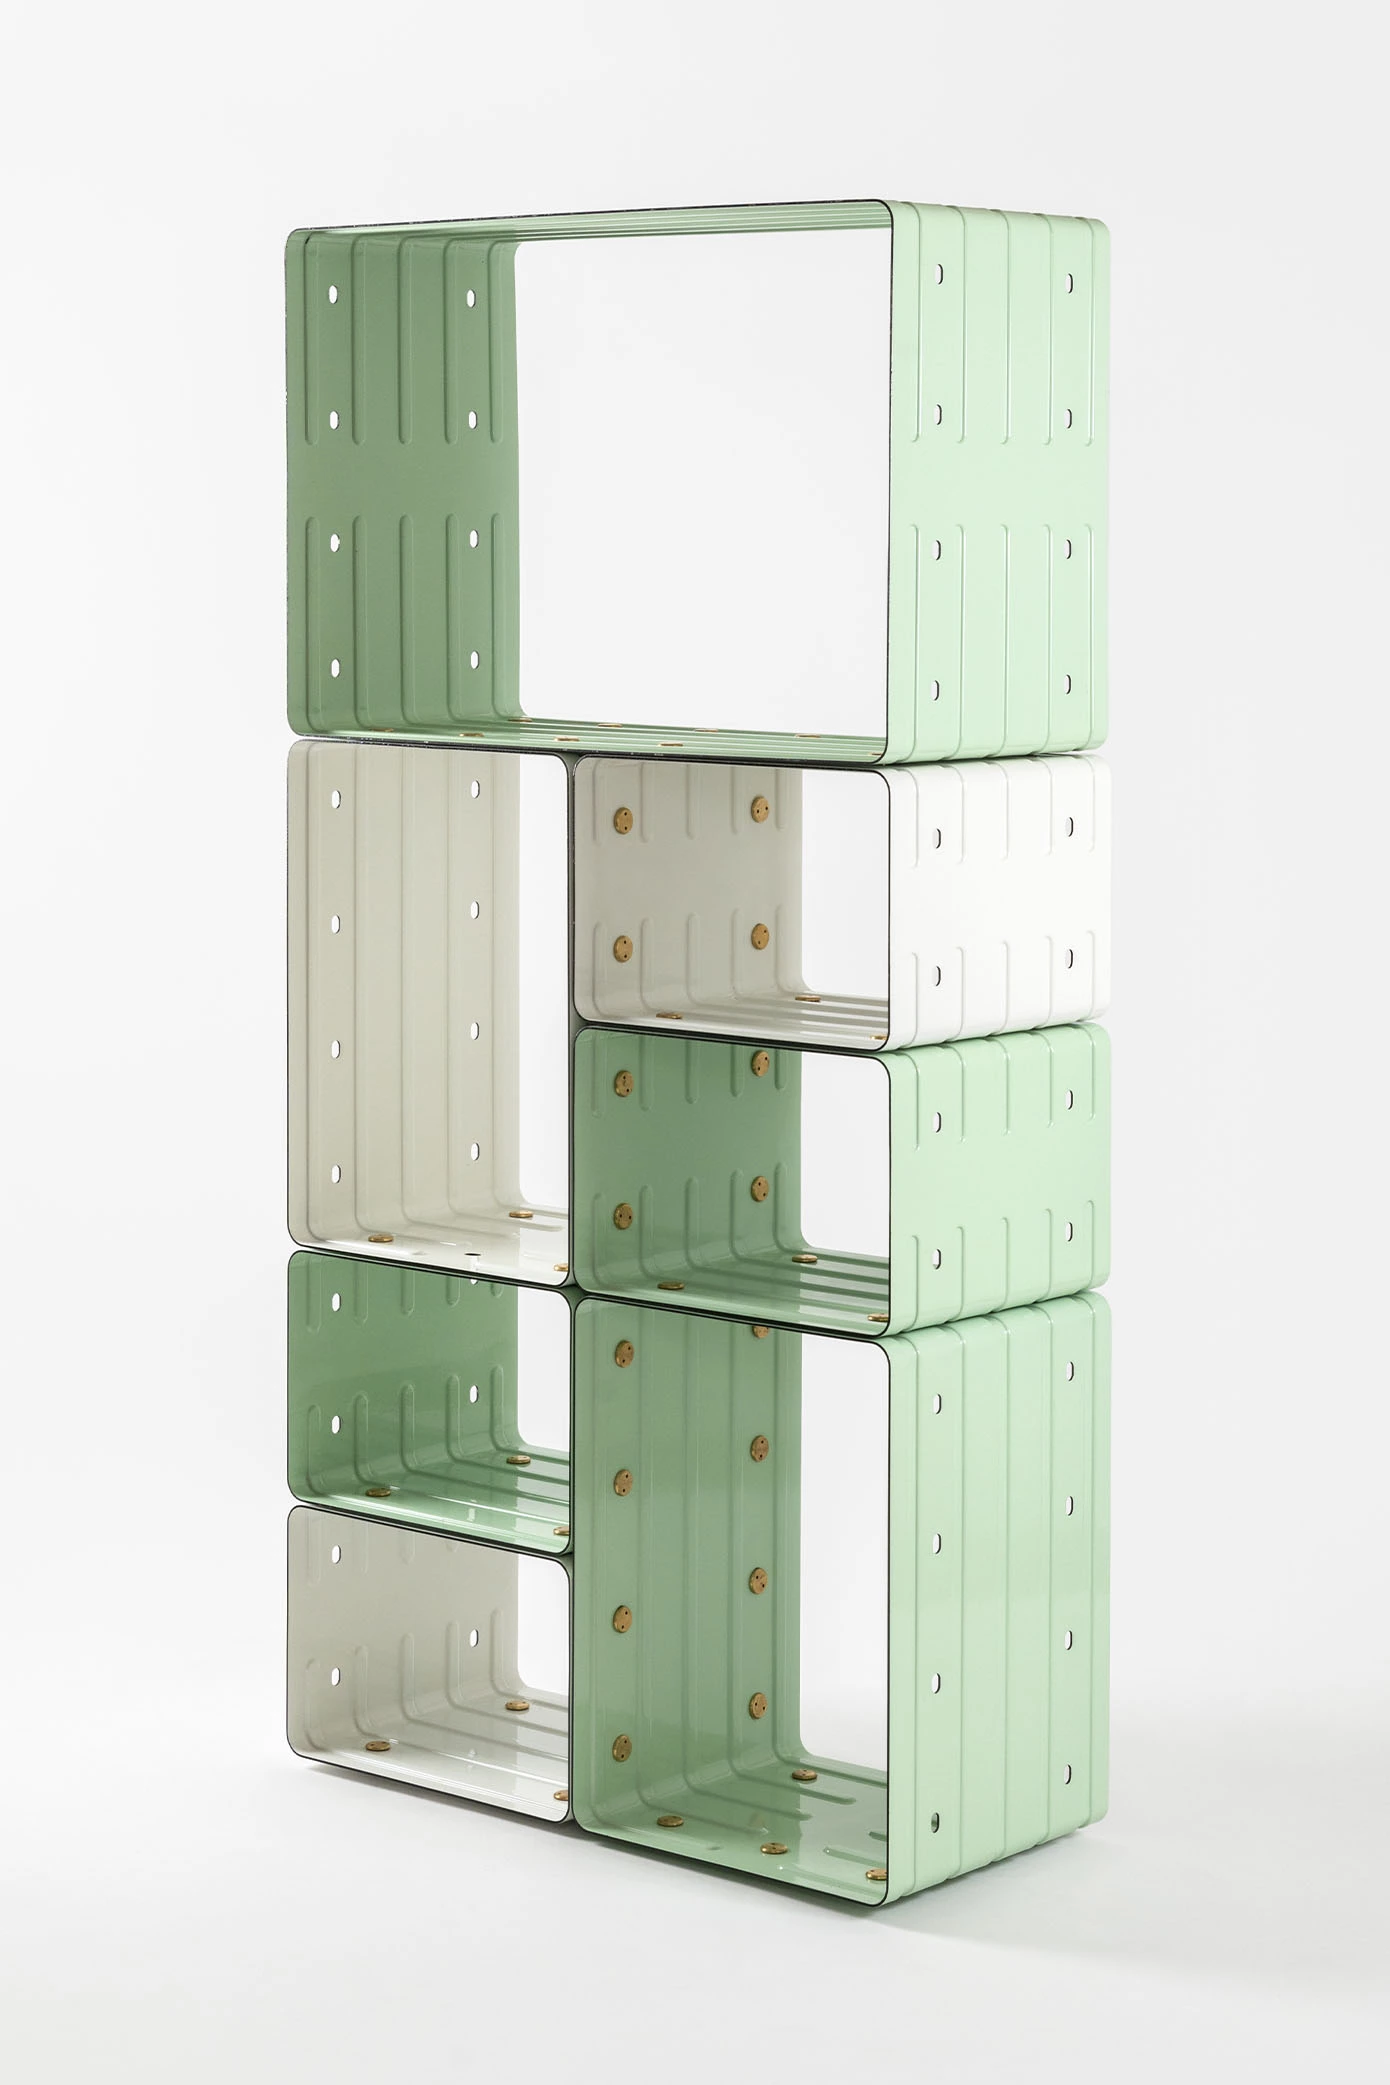 Quobus 1,2,4 two-colored - Marc Newson - Bookshelf - Galerie kreo